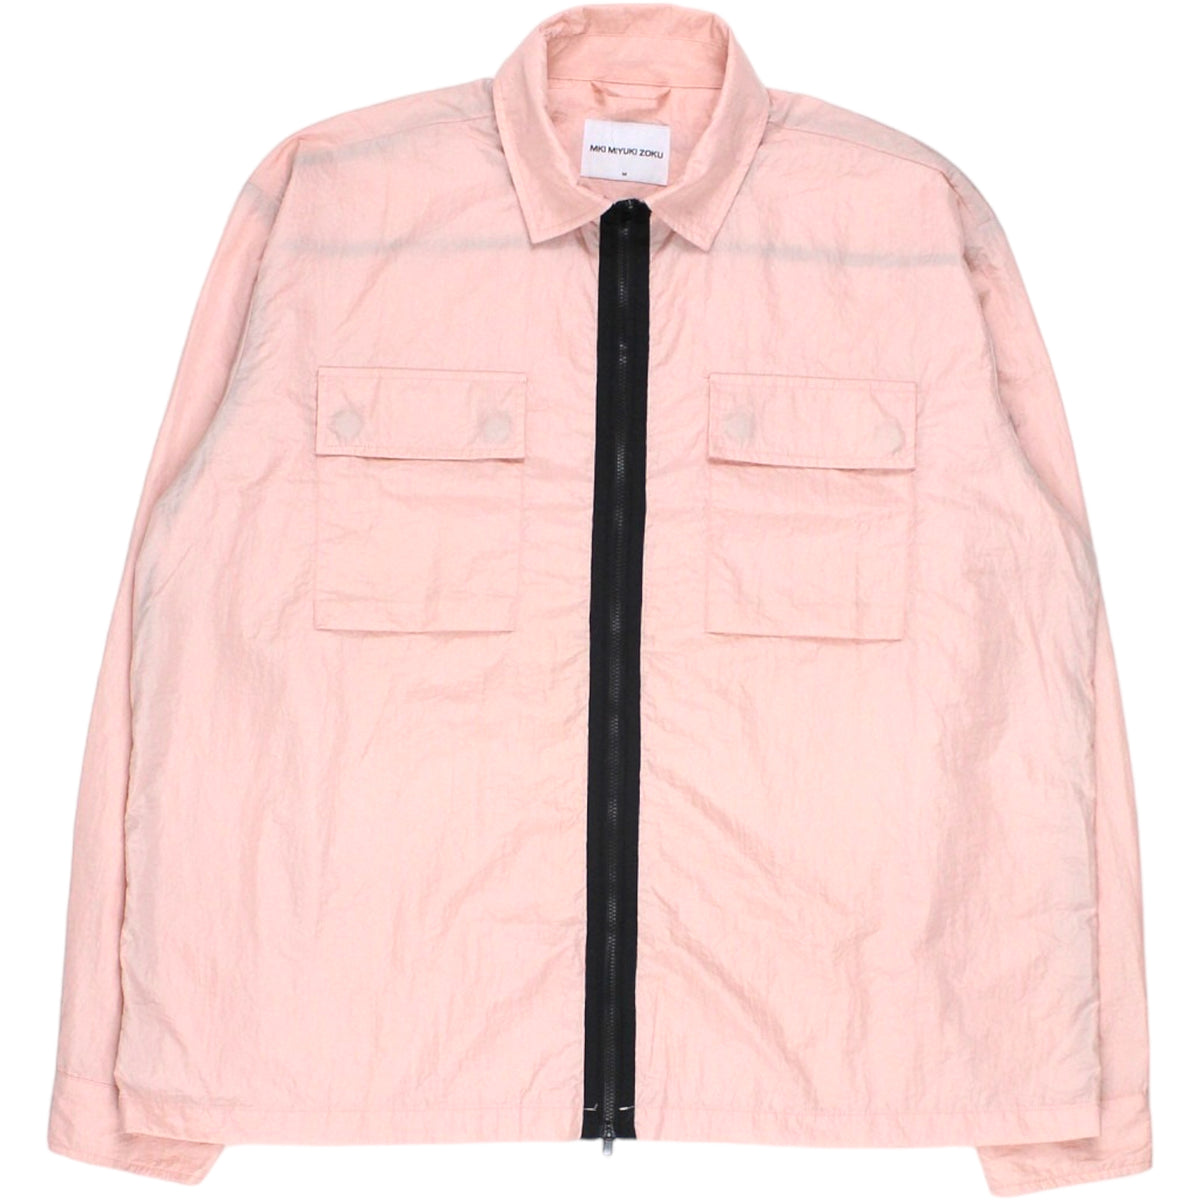 MKi Miyuki Zoku Pink Nylon Zip Shirt Jacket